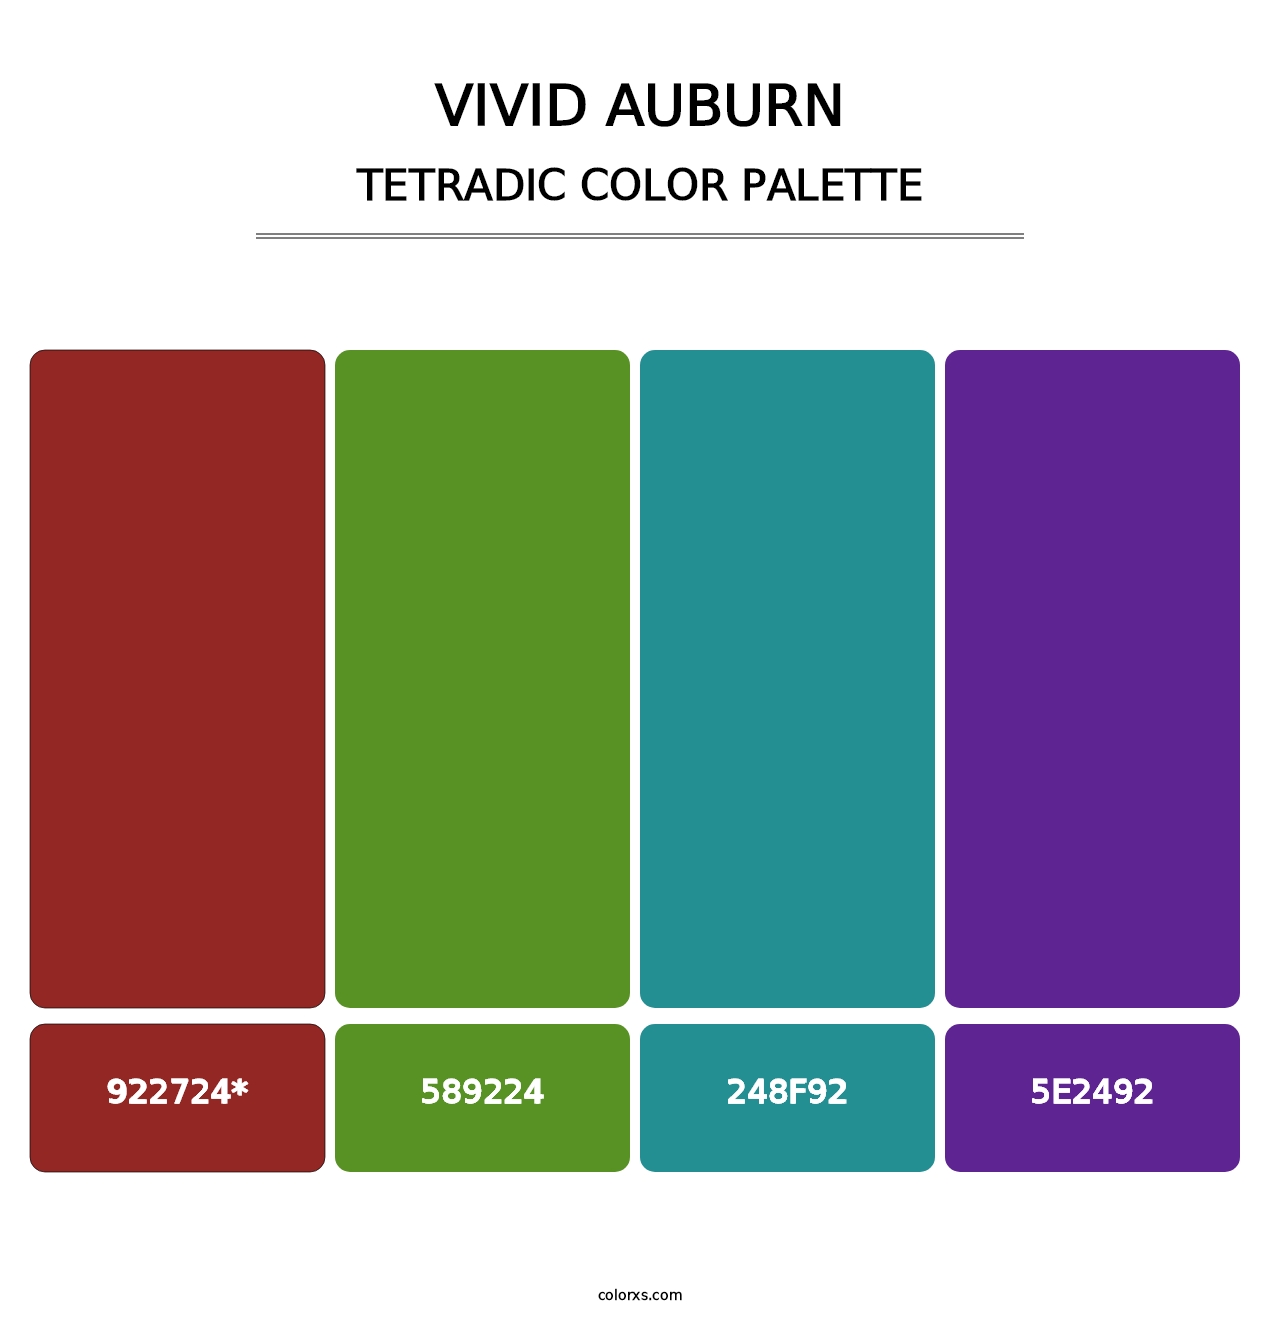 Vivid Auburn - Tetradic Color Palette